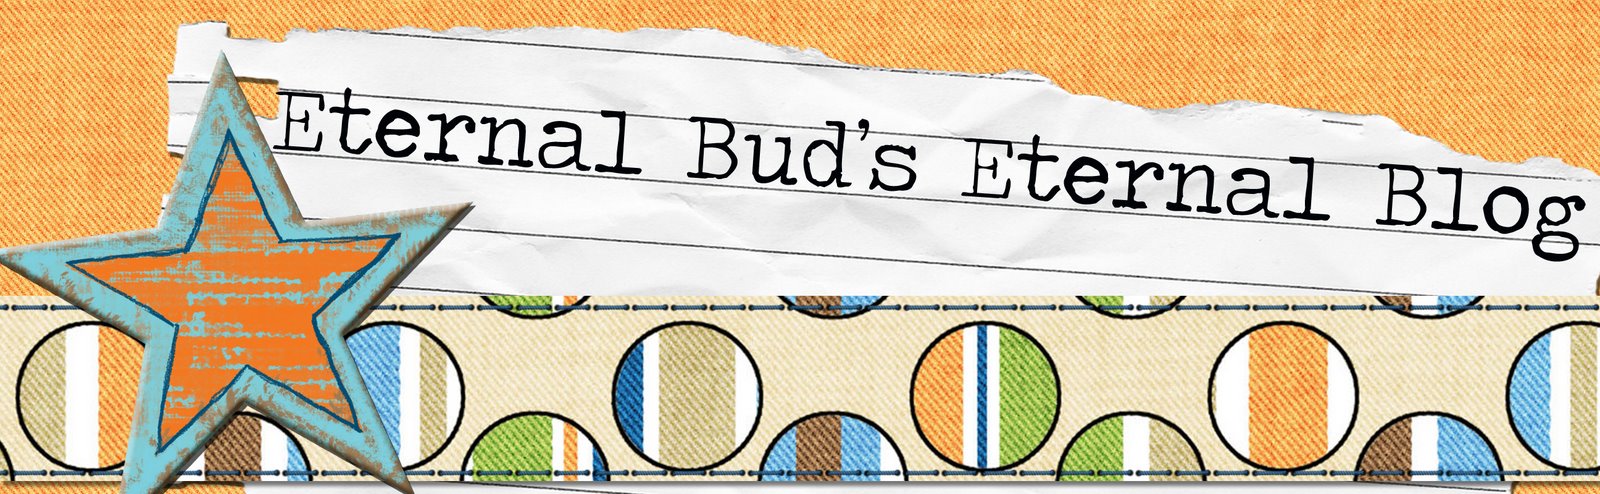 Eternal Bud's Eternal Blog